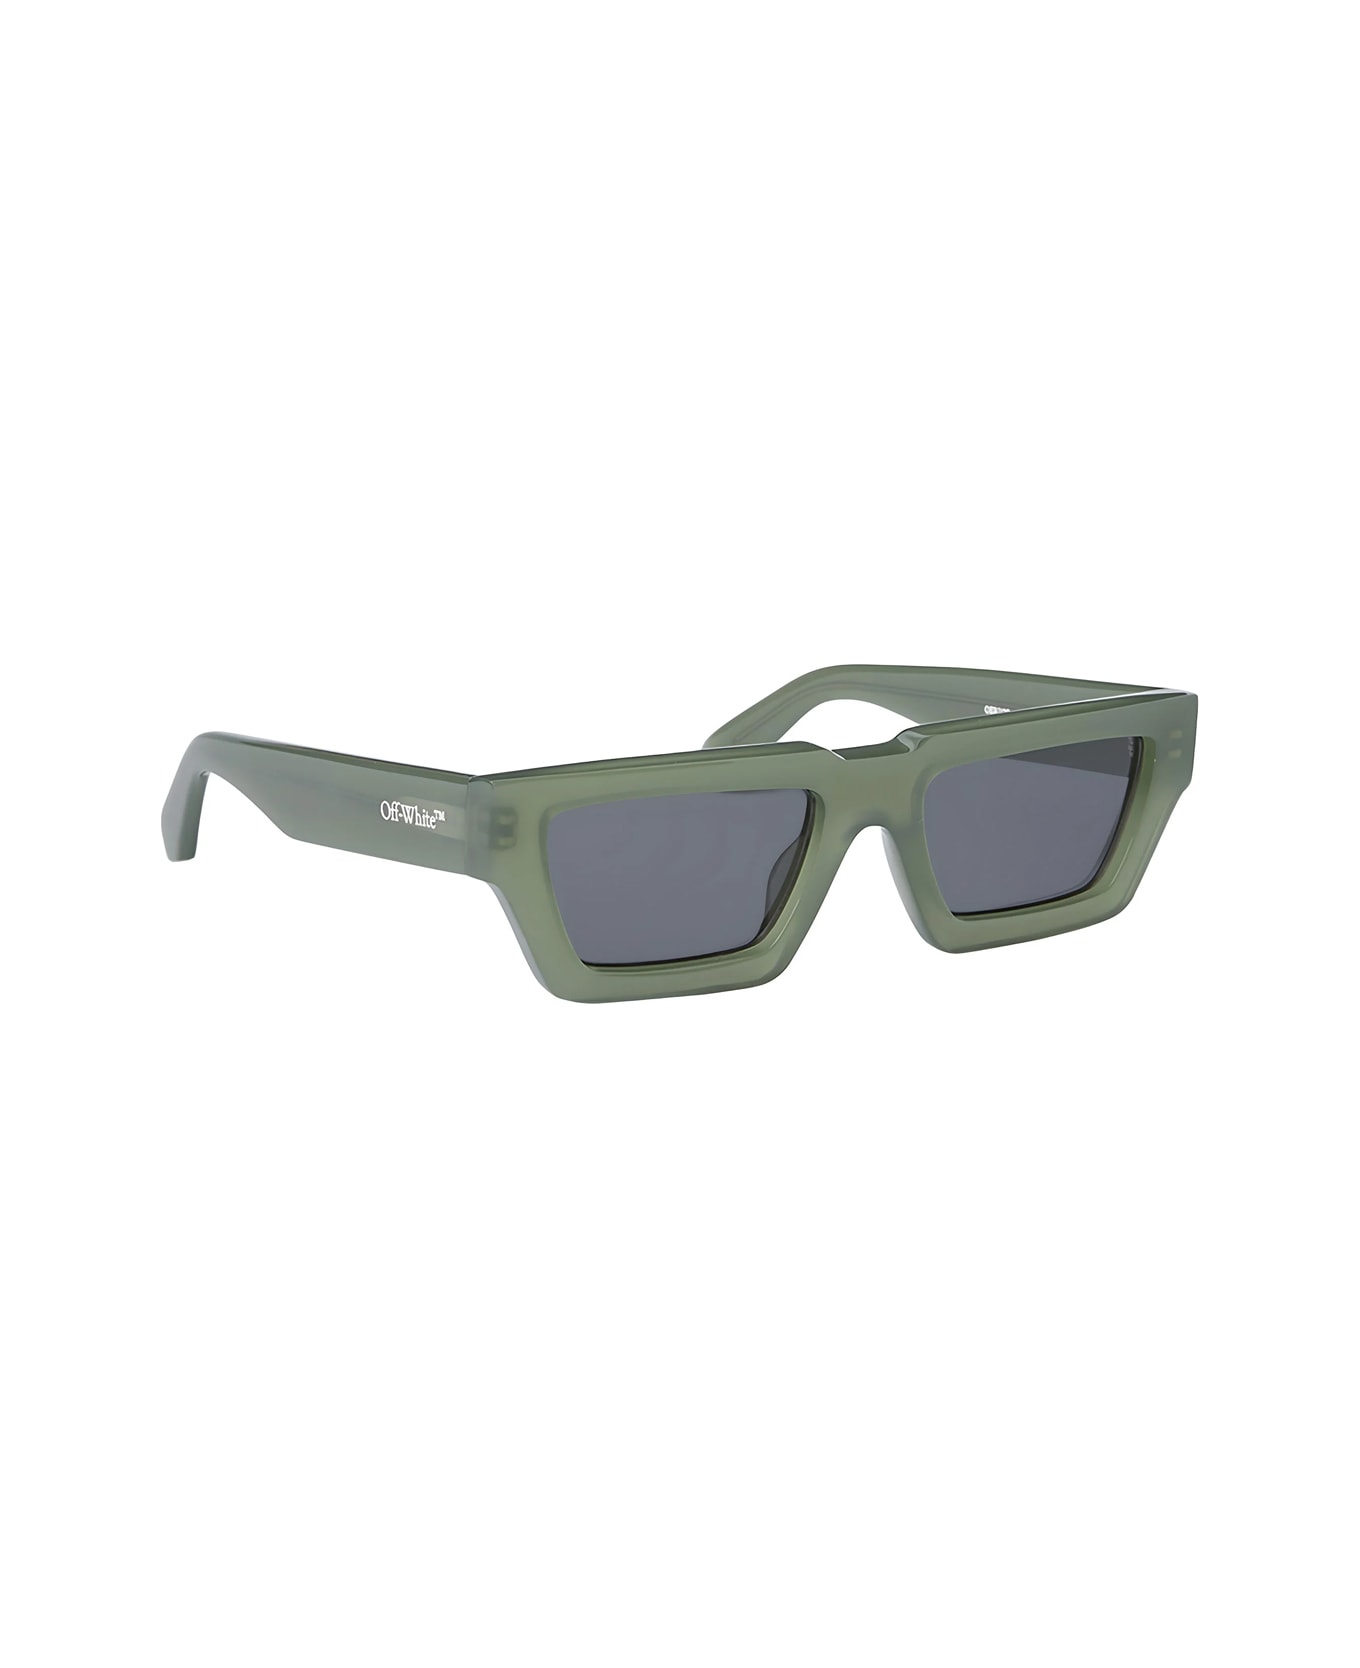 Off-White Oeri129 Manchester 5707 Sage Green Sunglasses - Verde